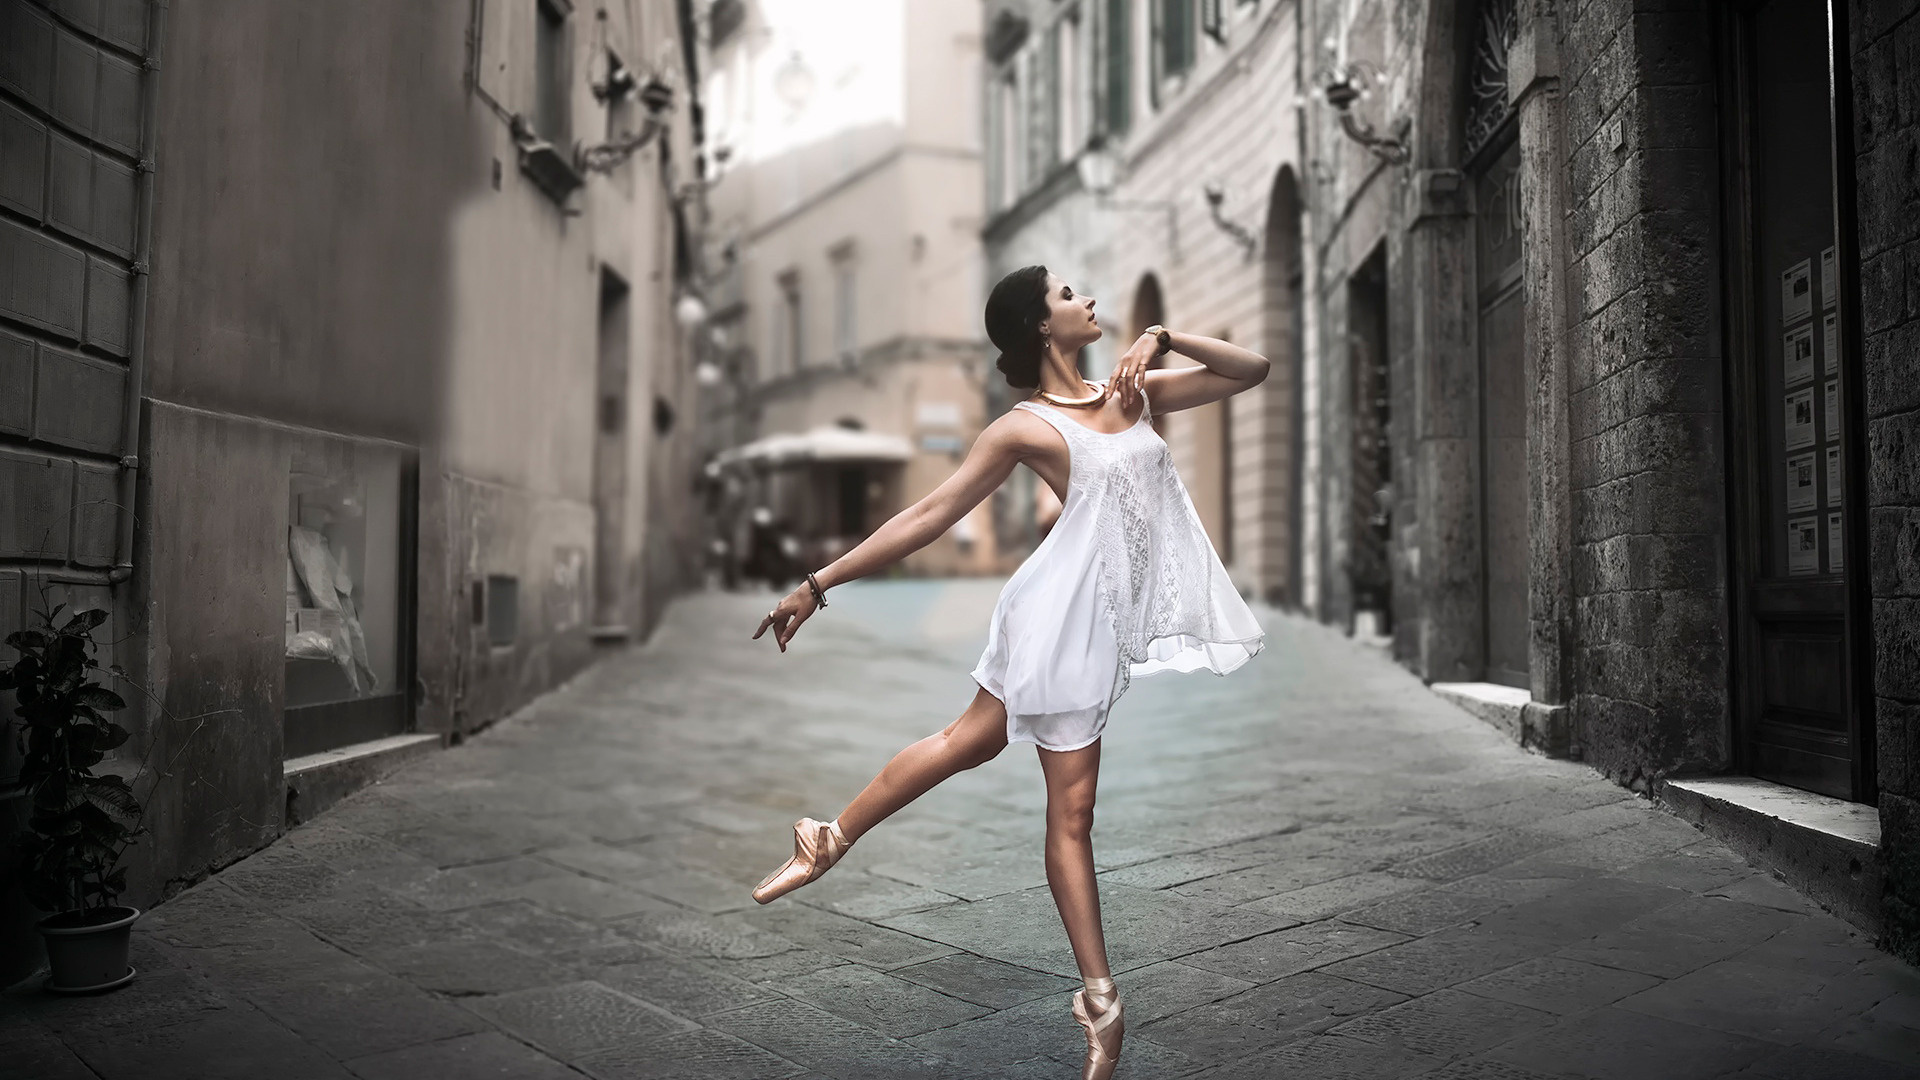 Ballet: Street dance, Ballerina, Posing. 1920x1080 Full HD Wallpaper.